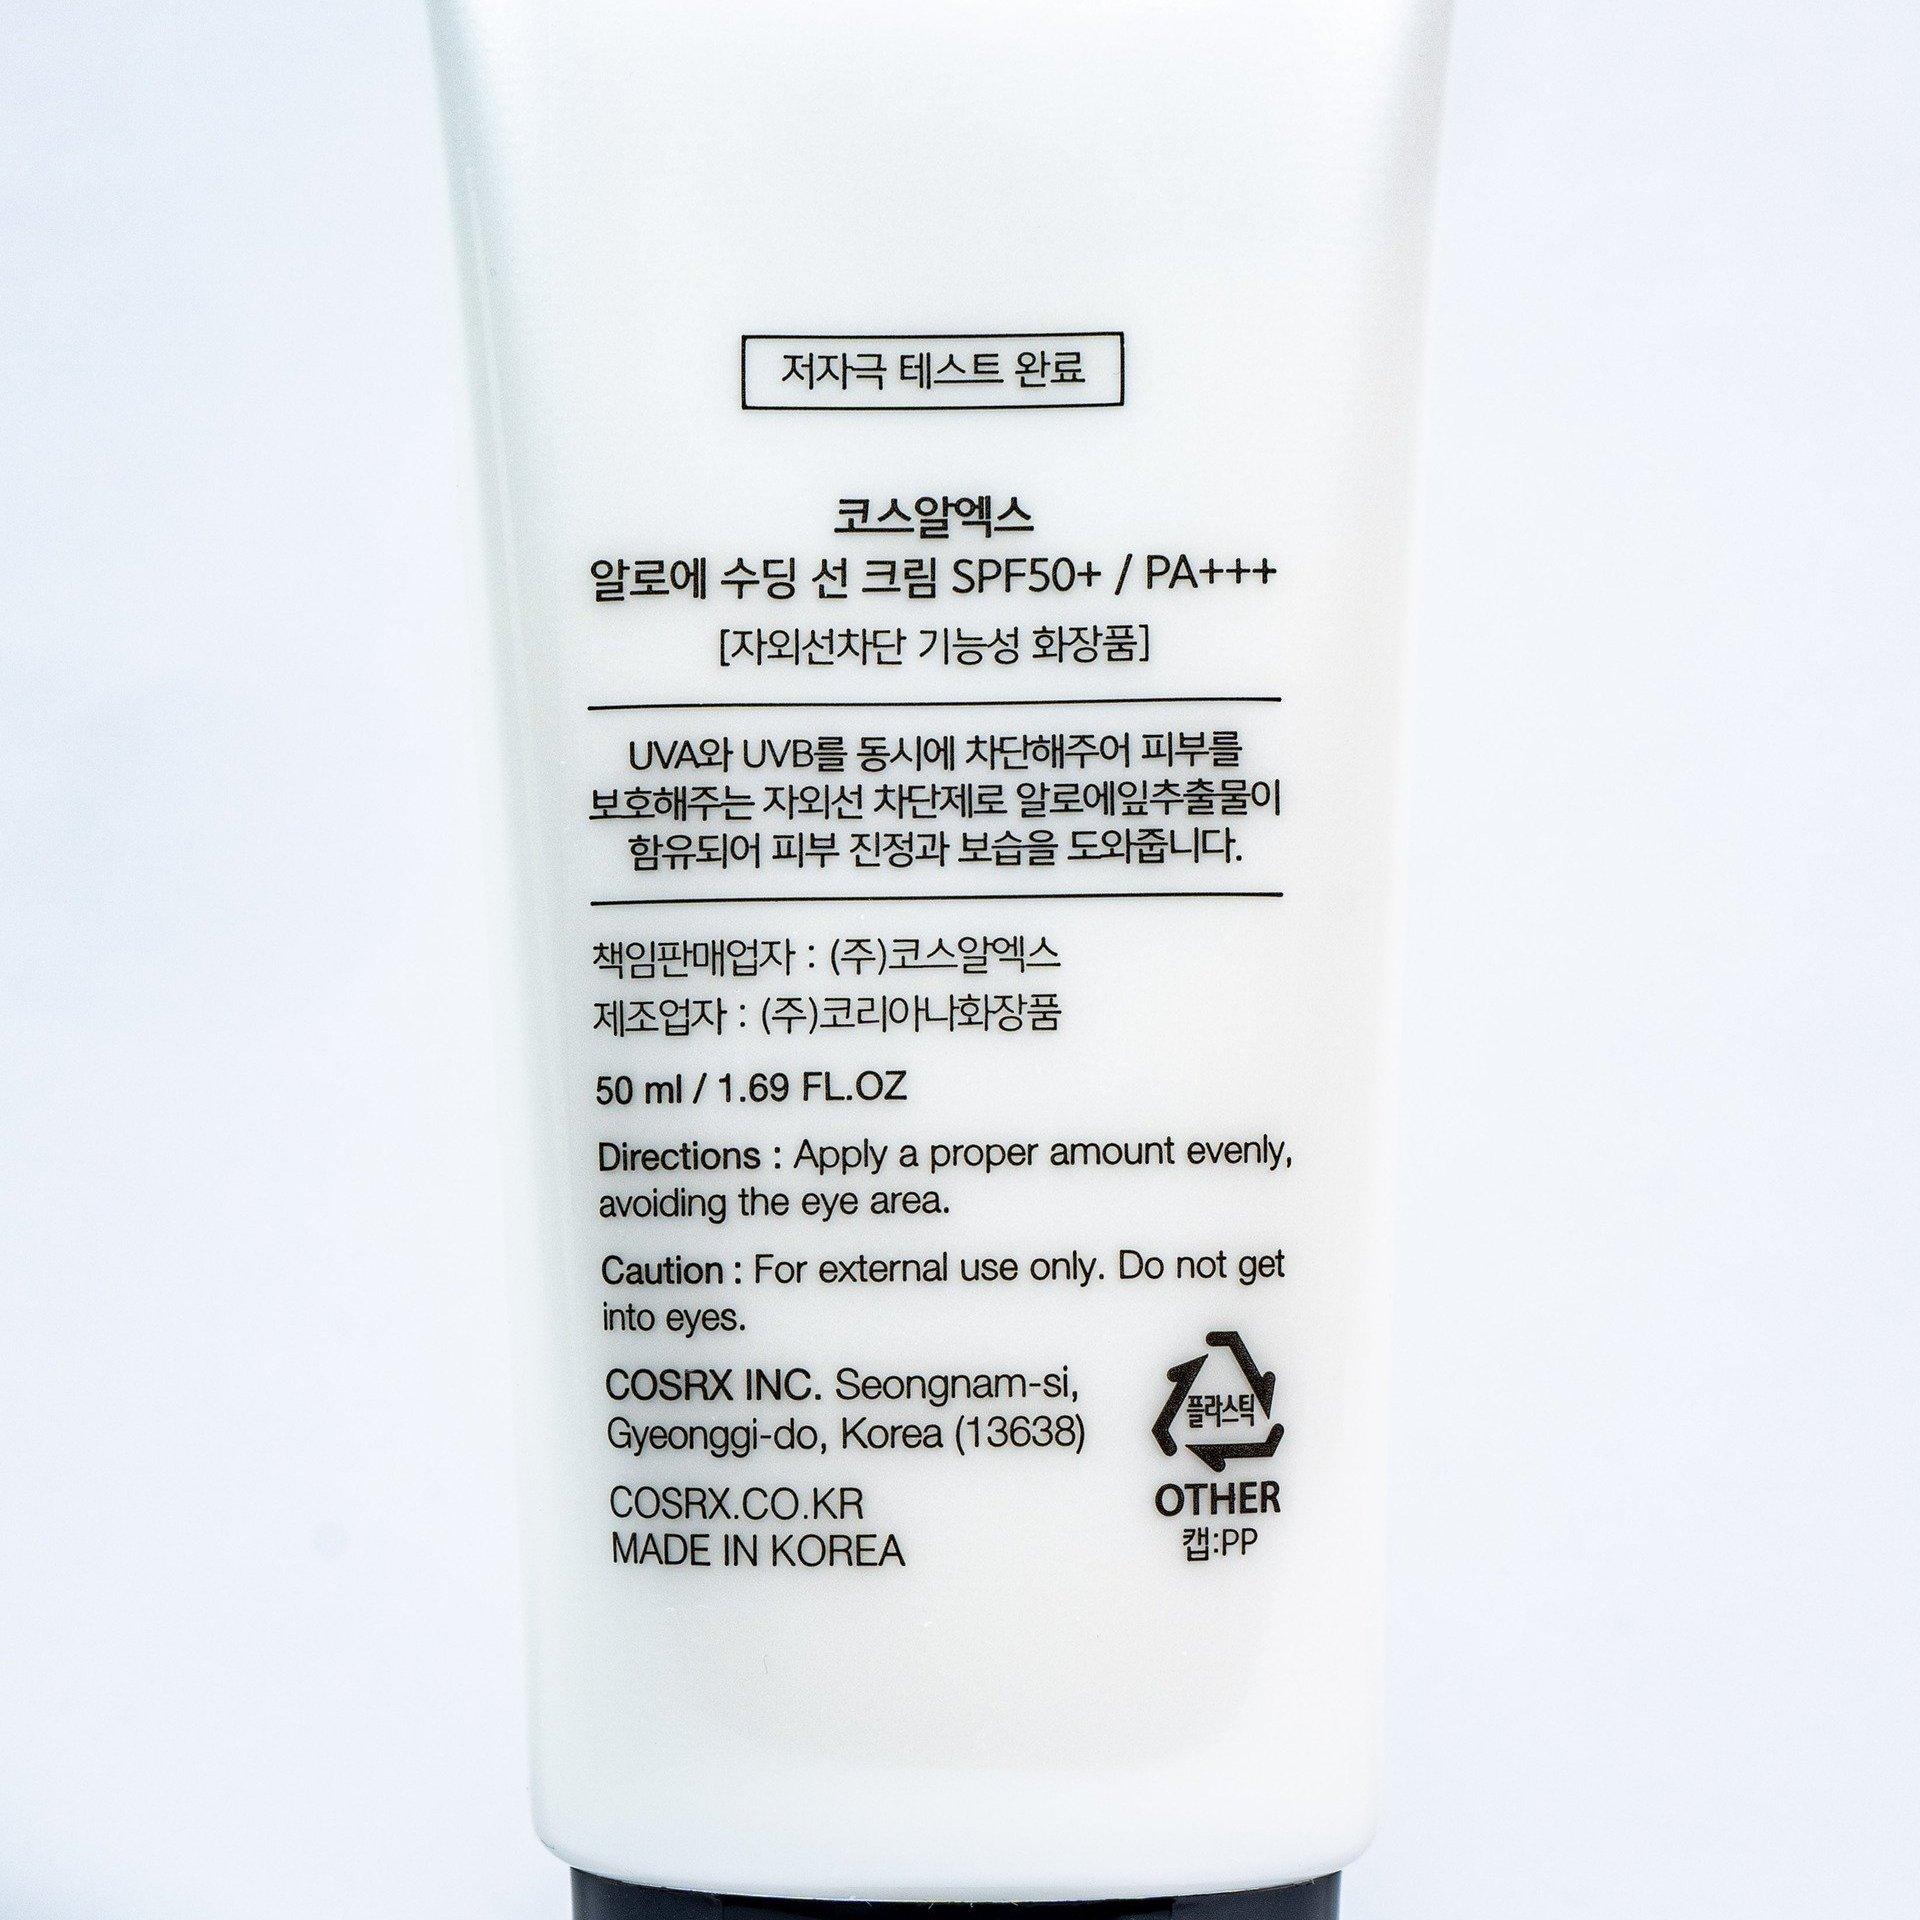 COSRX Aloe Soothing Sun Cream SPF50+ PA+++ 50ml